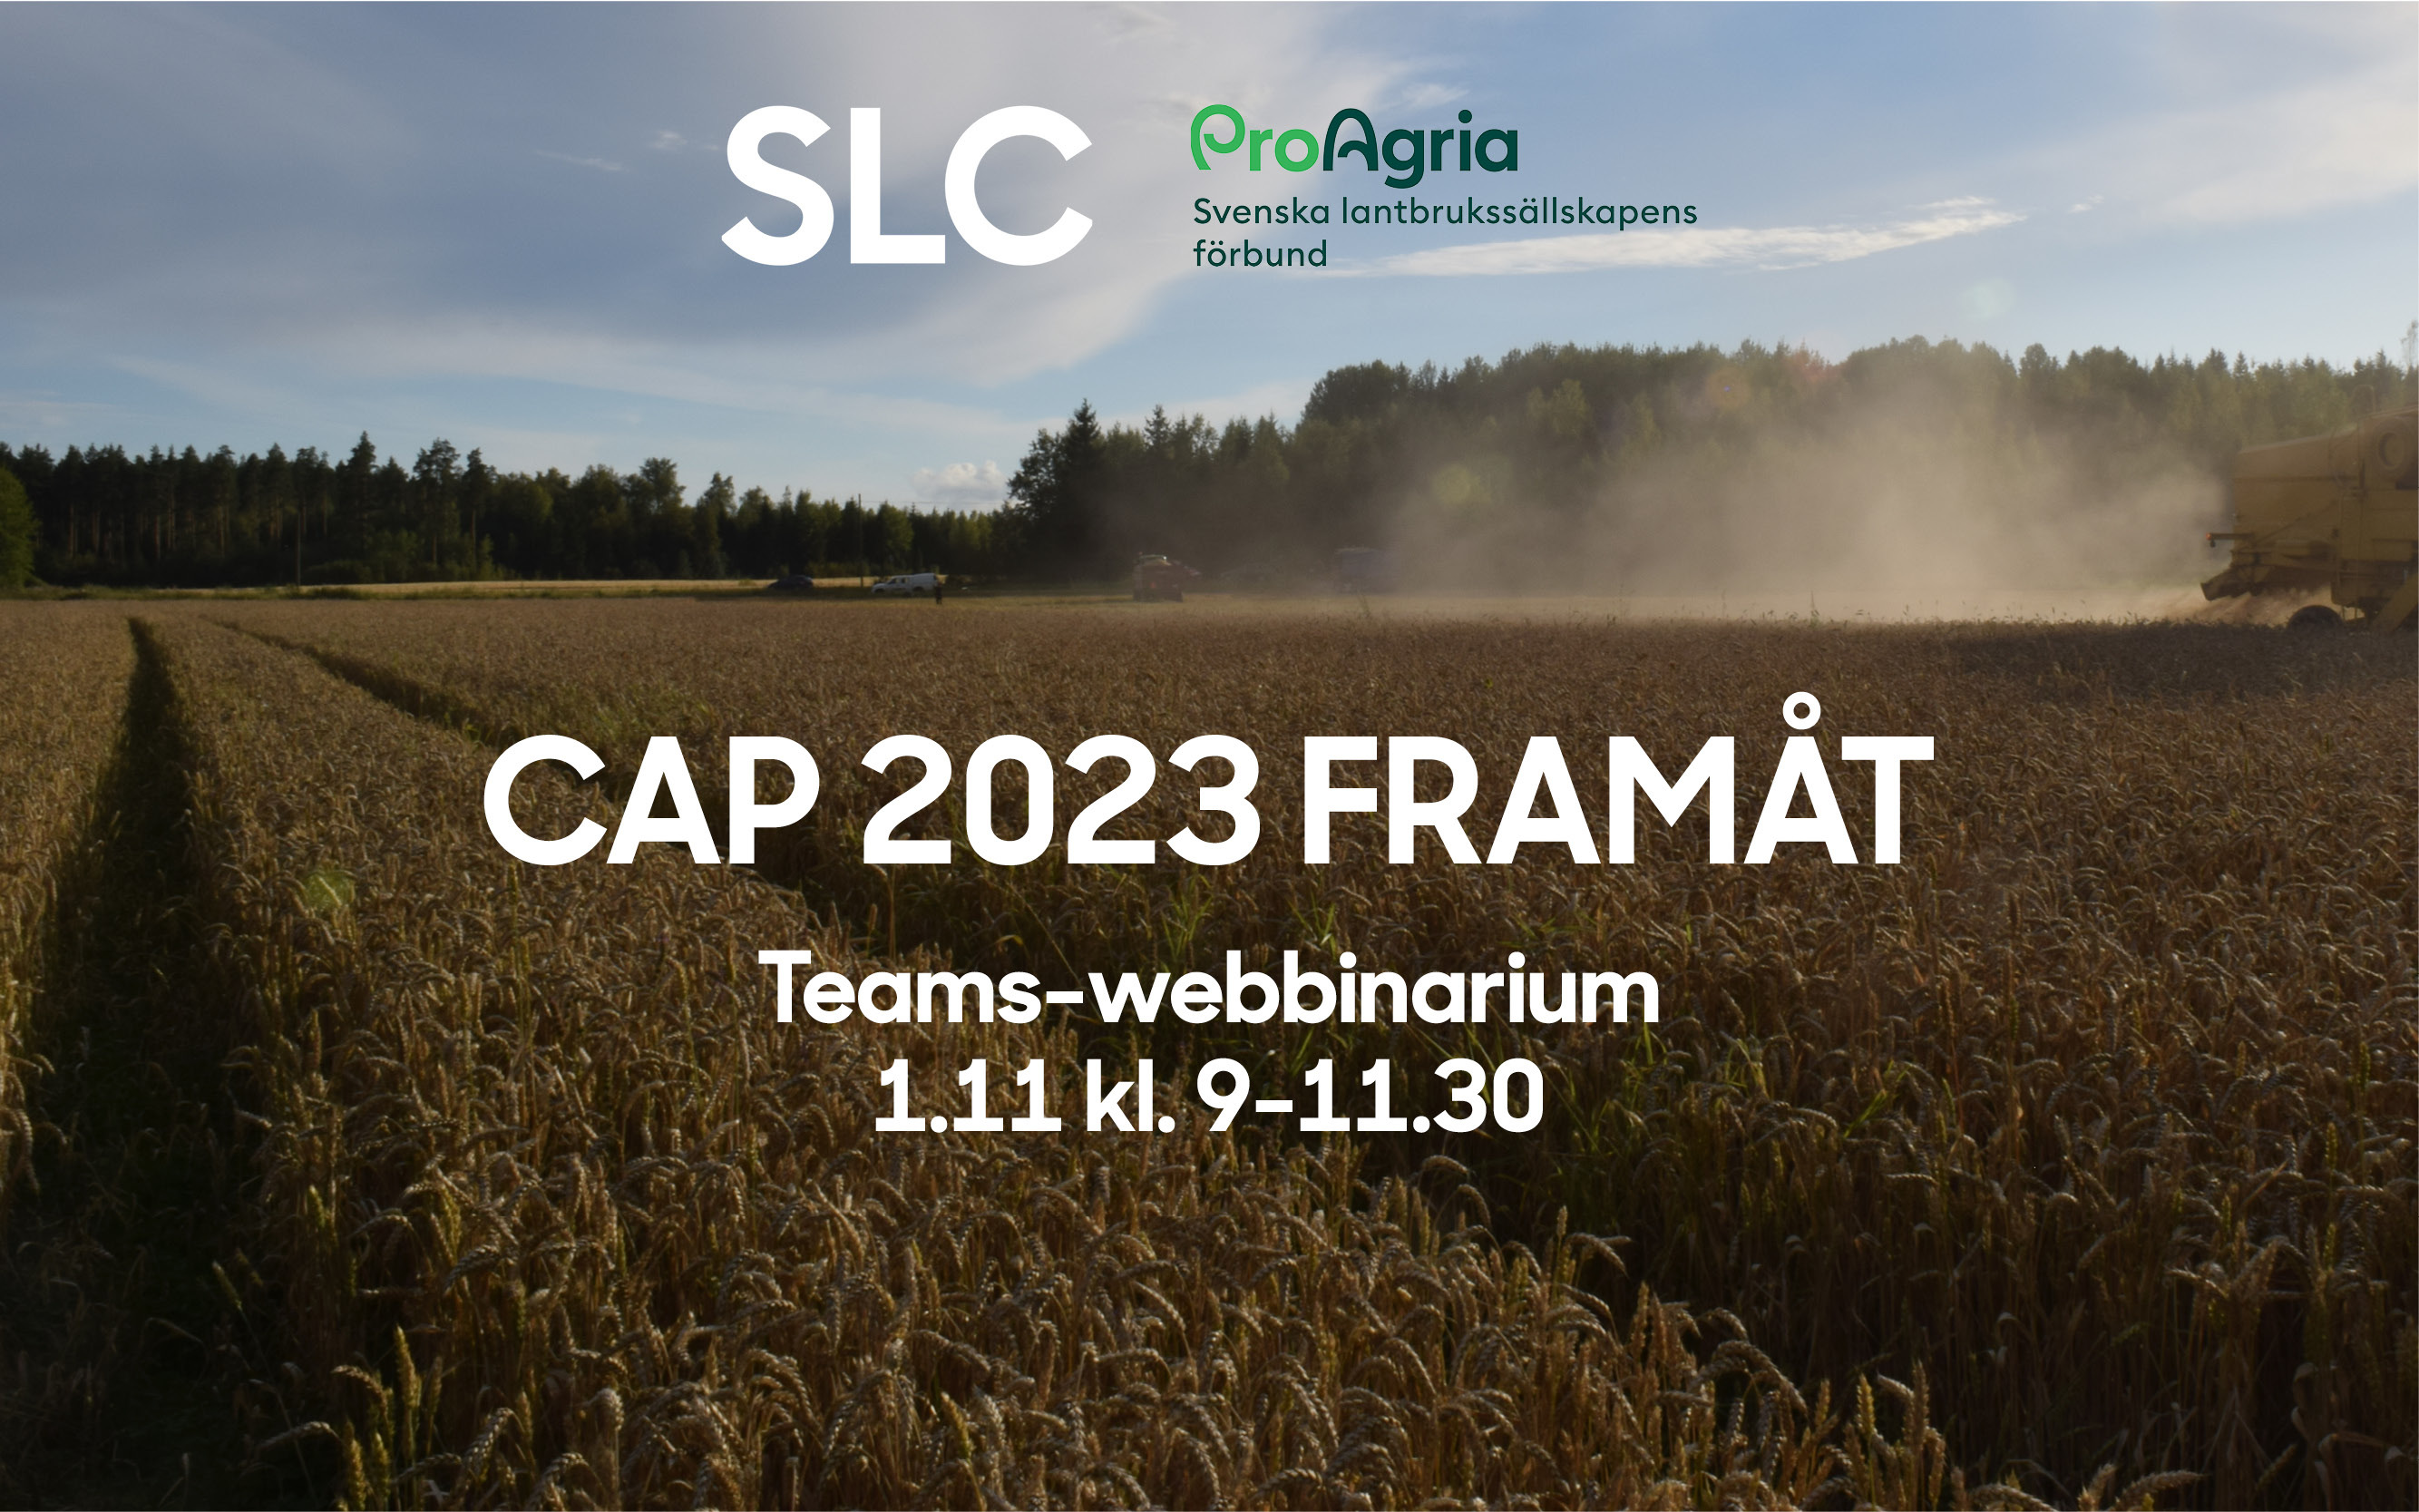 SLC - CAP 2023 framat webbinarium webb2